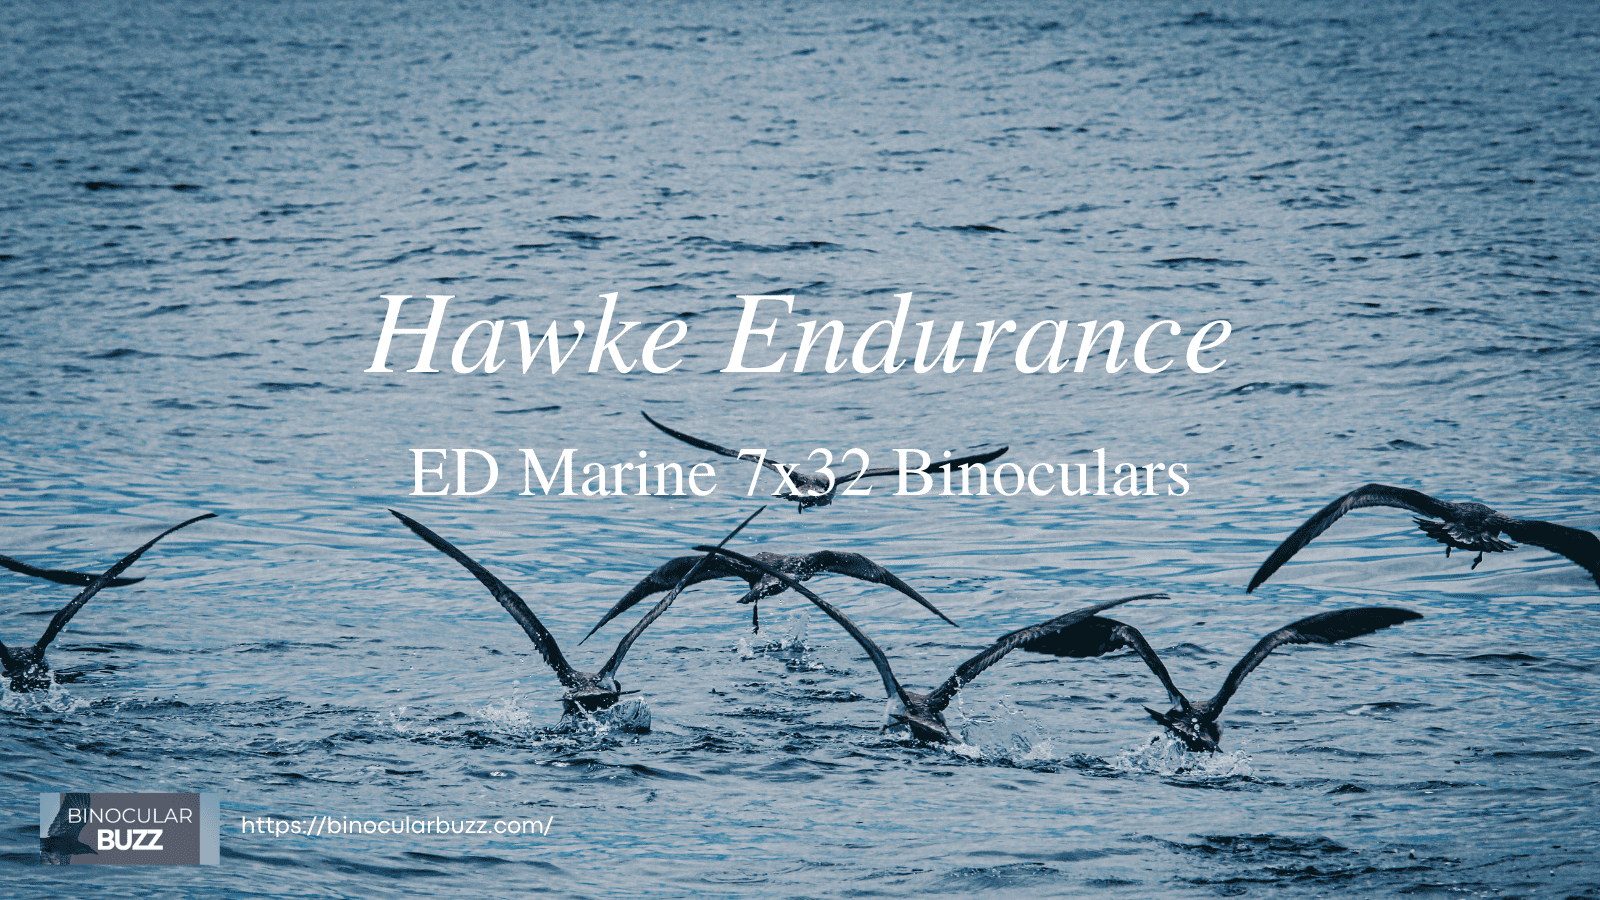 Hawke Endurance ED Marine 7x32 Binoculars Review